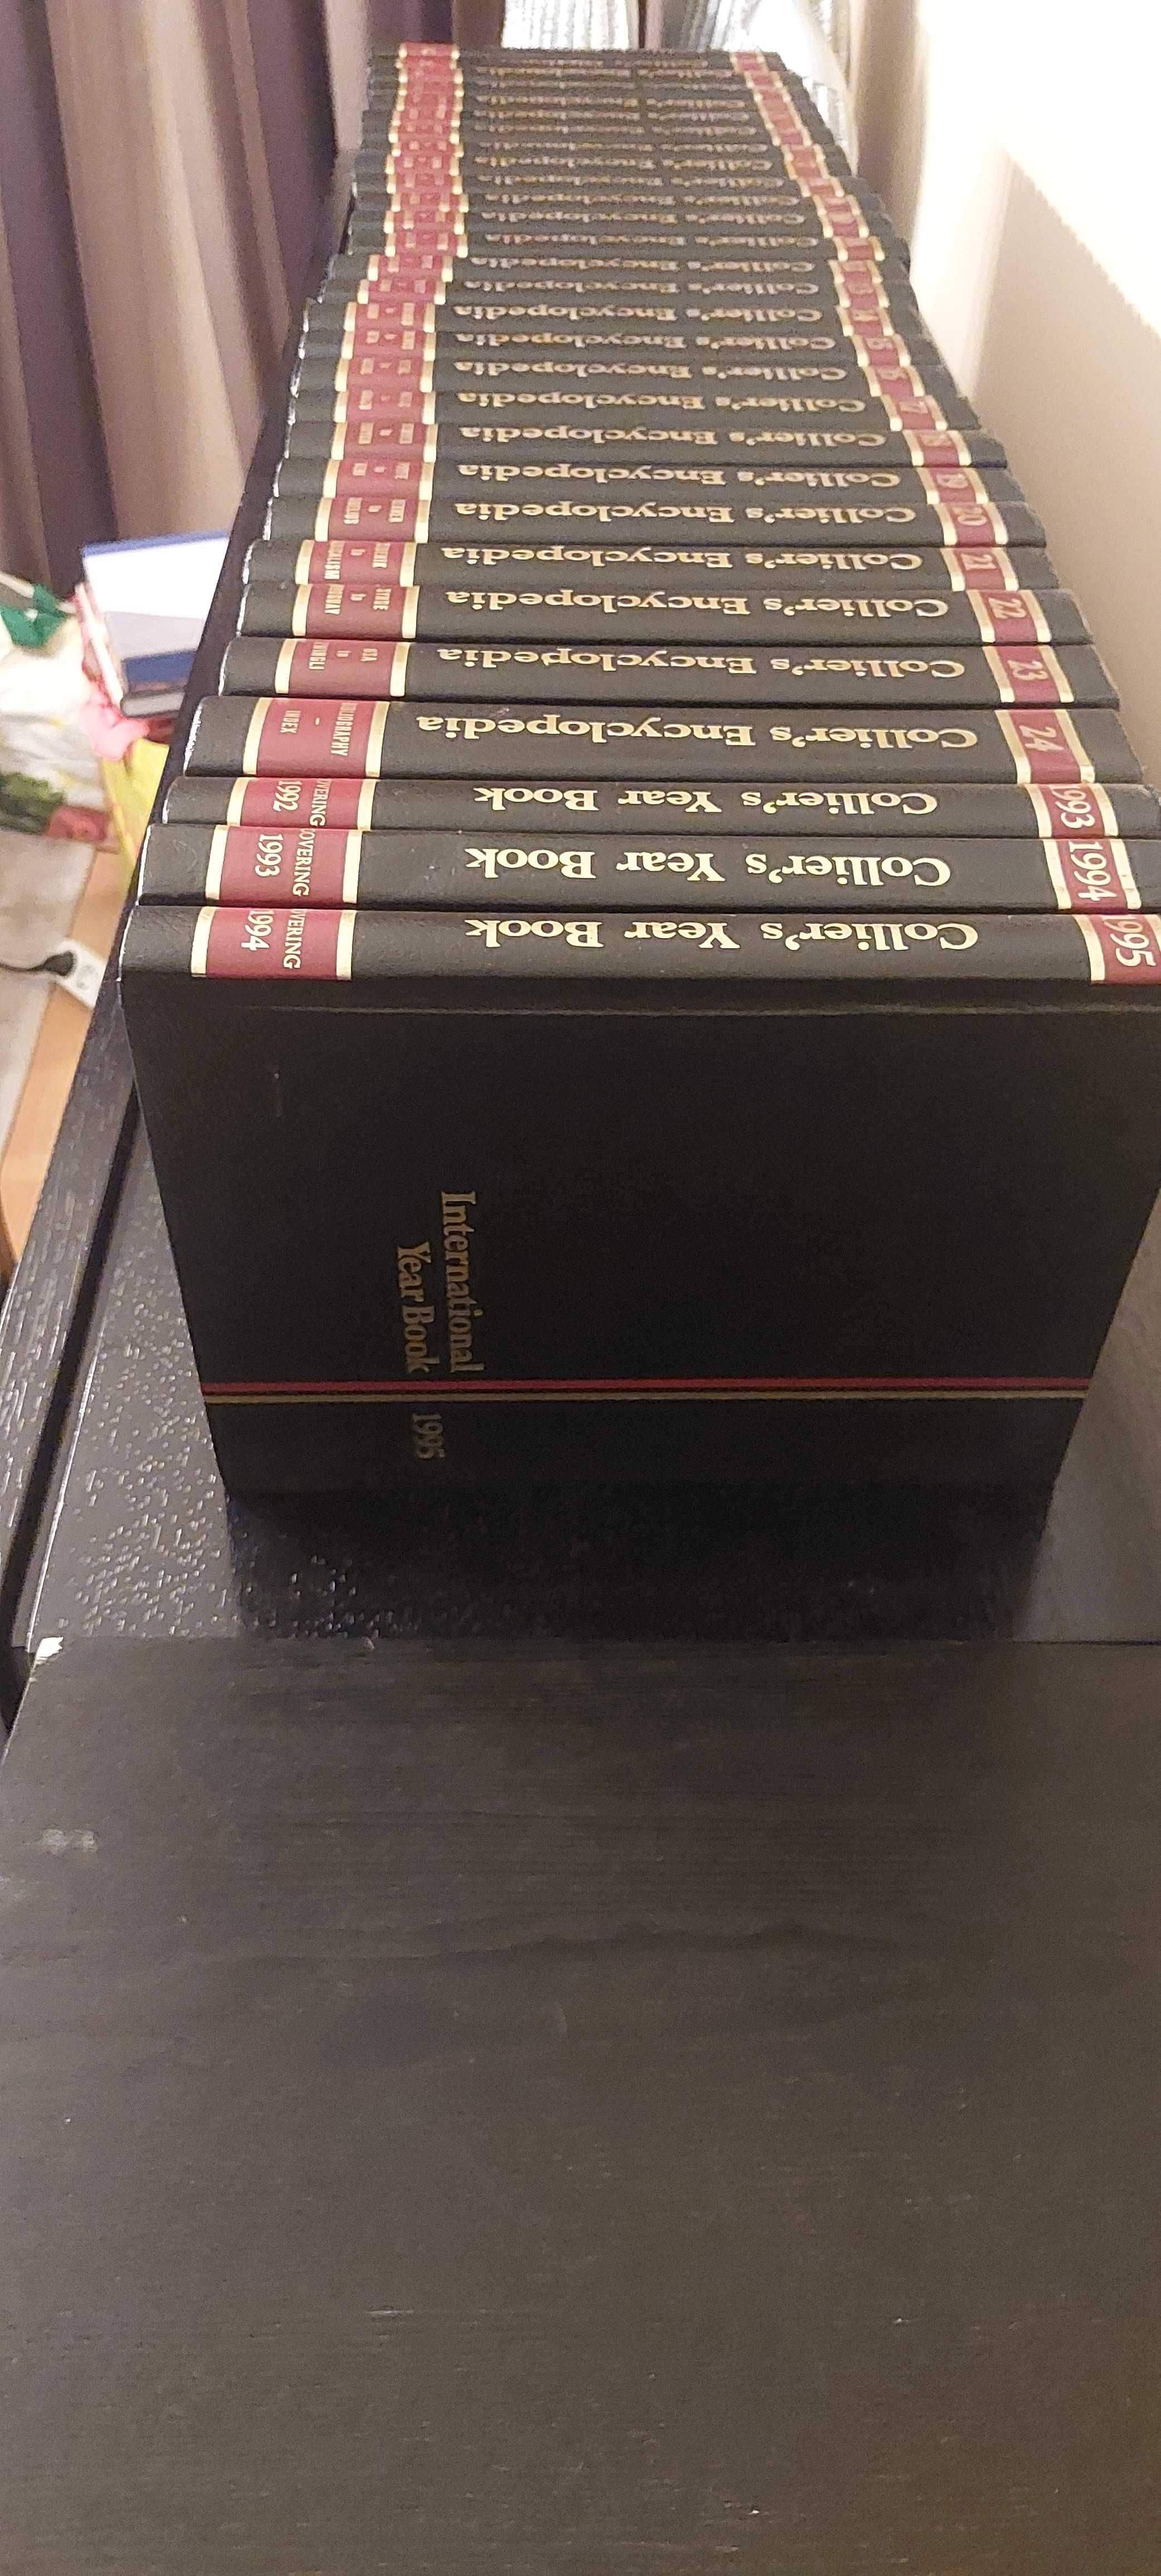 Collier's Encyclopedia (29 Vol.)